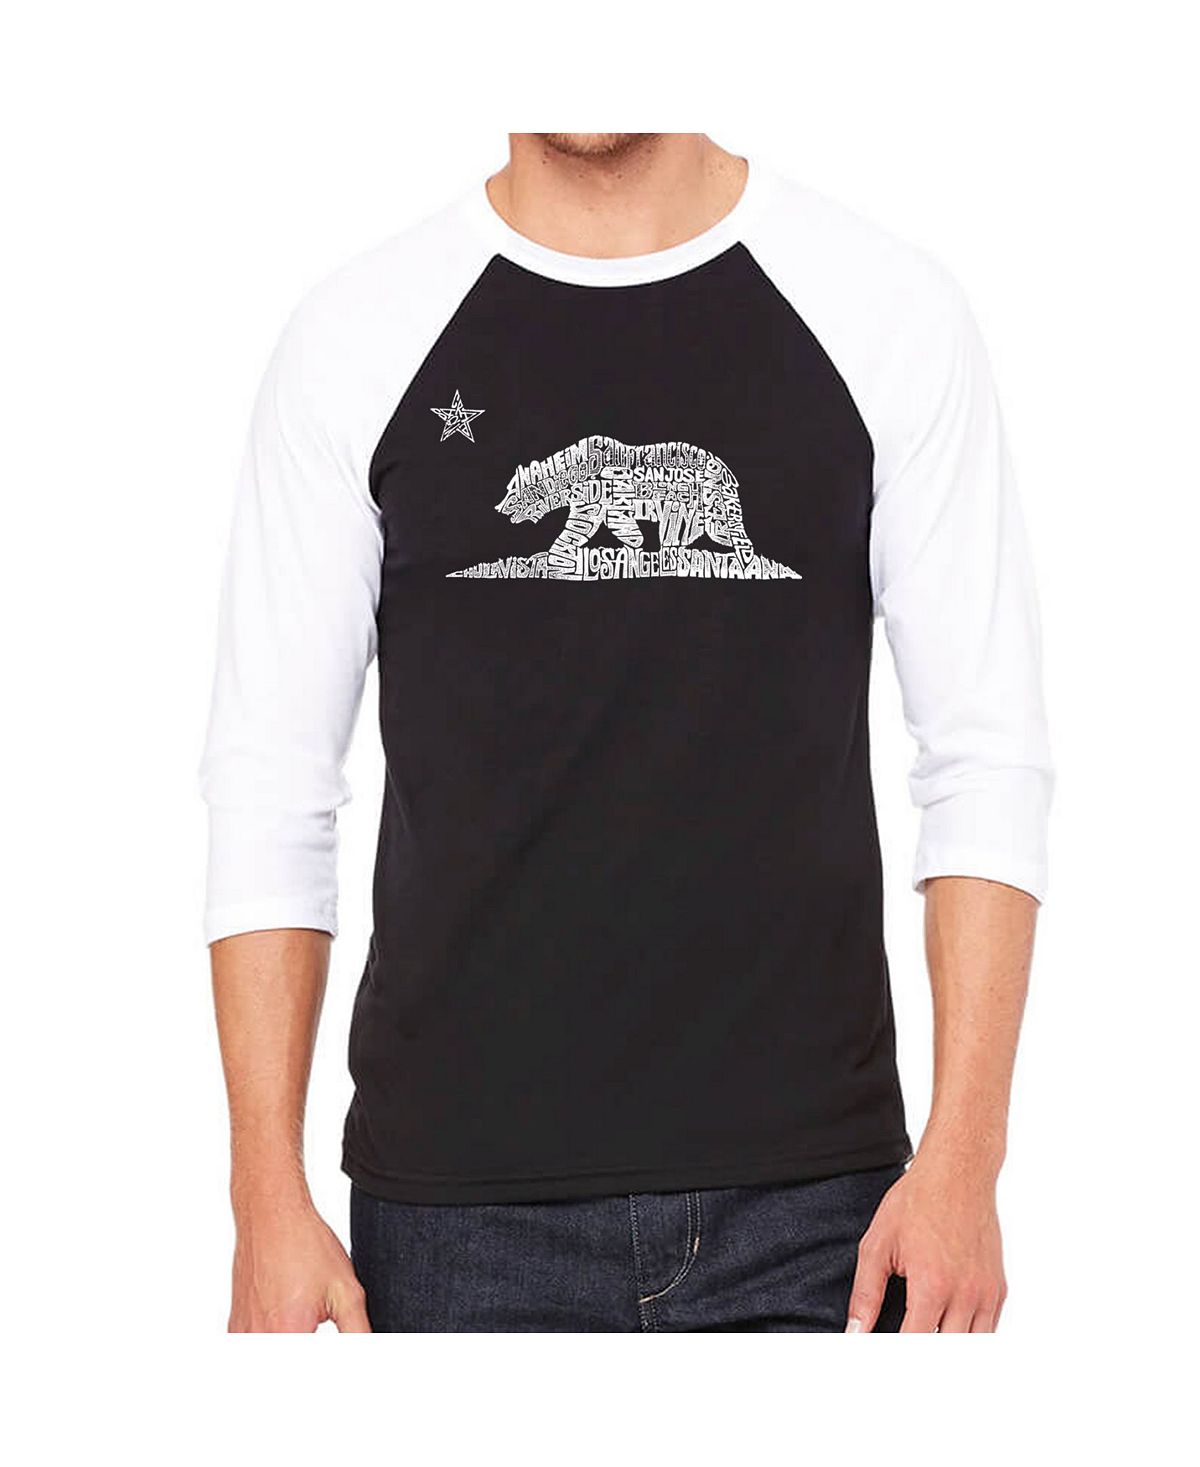 Мужская футболка реглан Word Art California Bear LA Pop Art мужская футболка с надписью california dreaming реглан word art la pop art серый